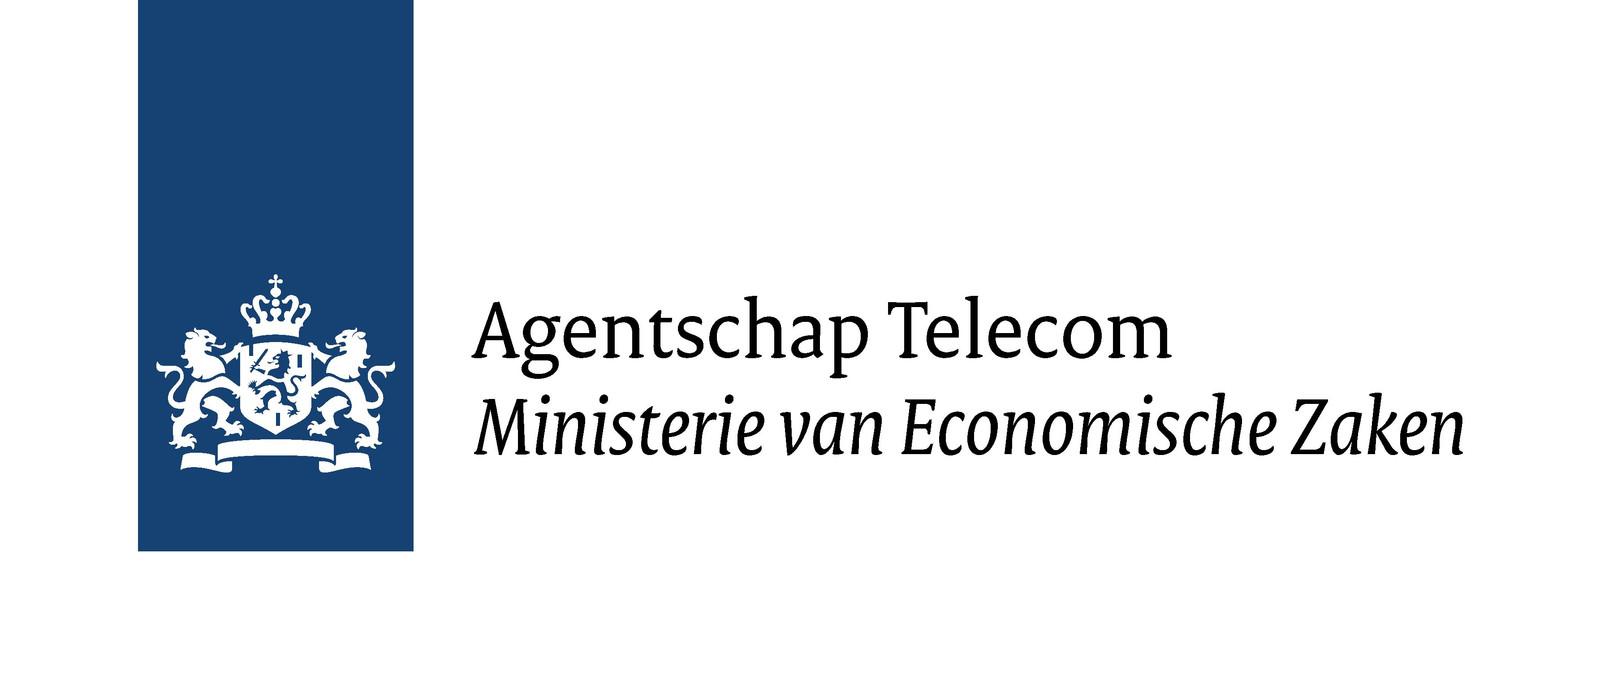 More information about "Nep e-mail Agentschap Telecom met boete over downloaden"